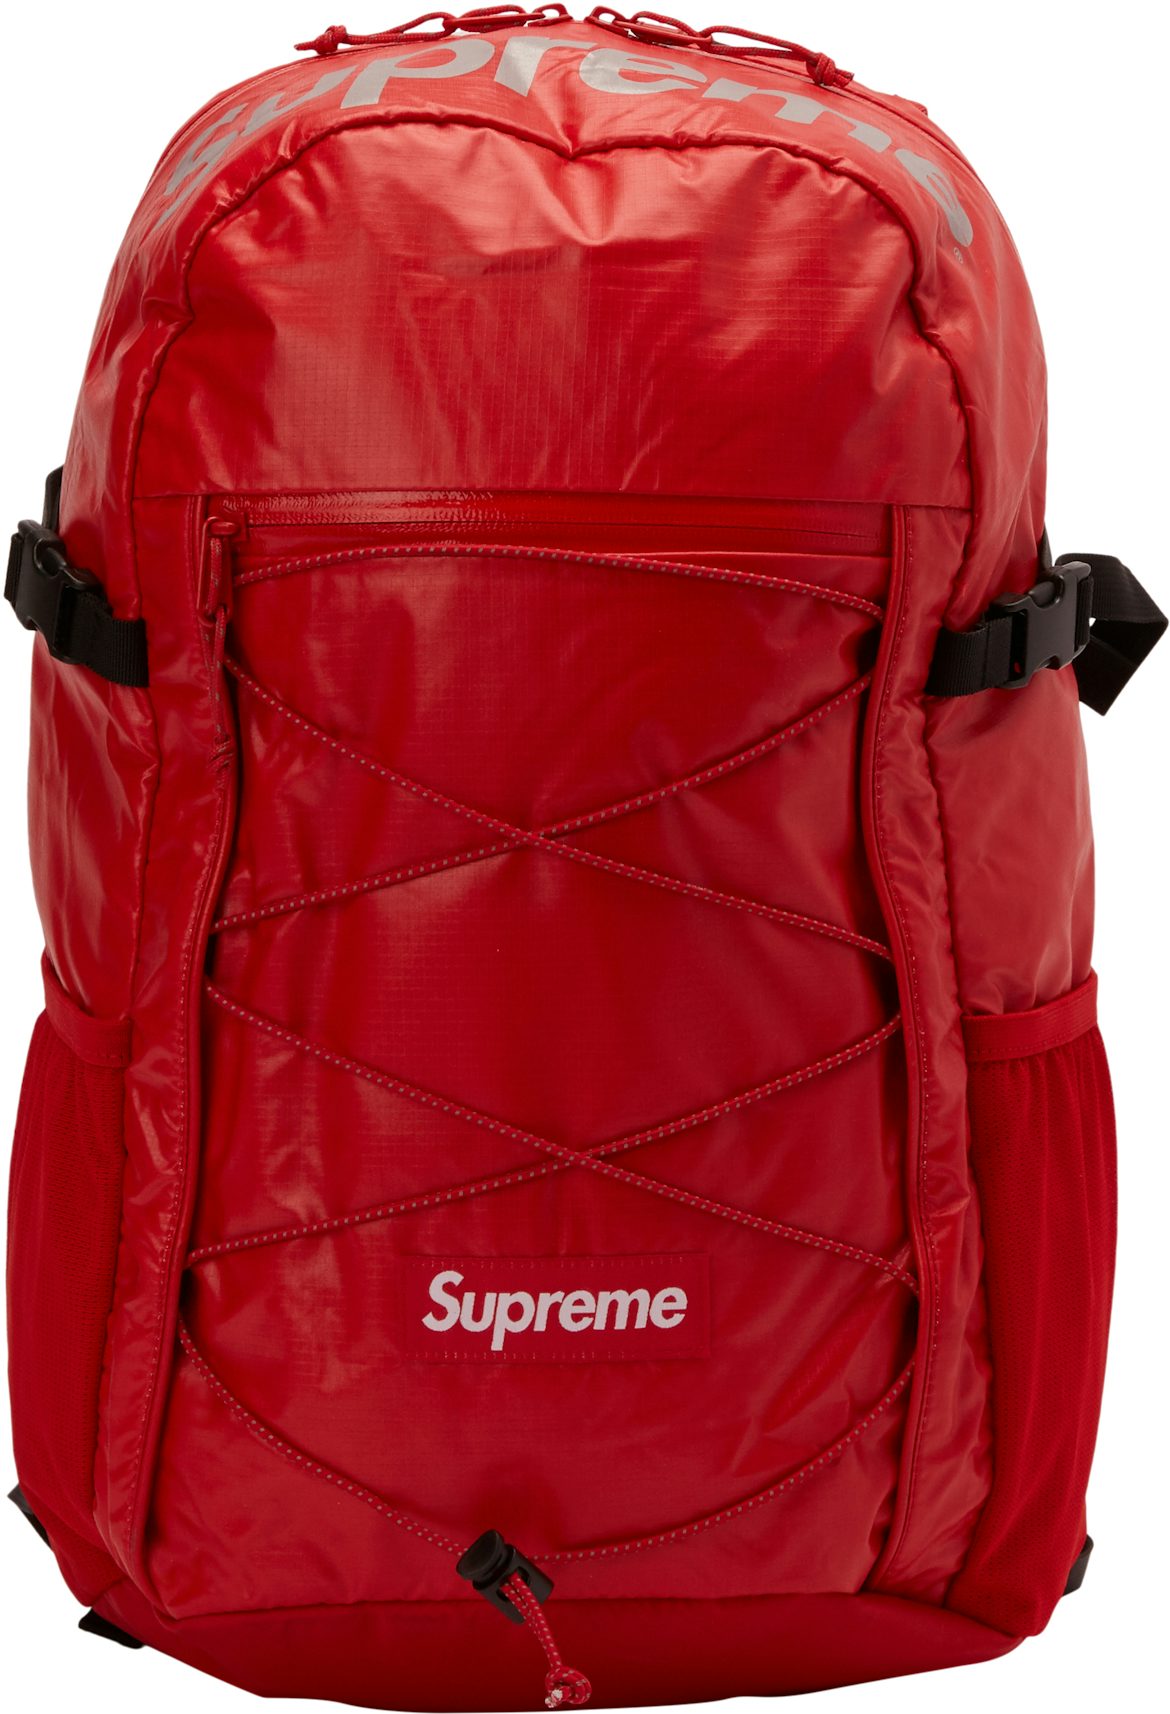 SUPREME Teal Cordura Backpack (SS17)